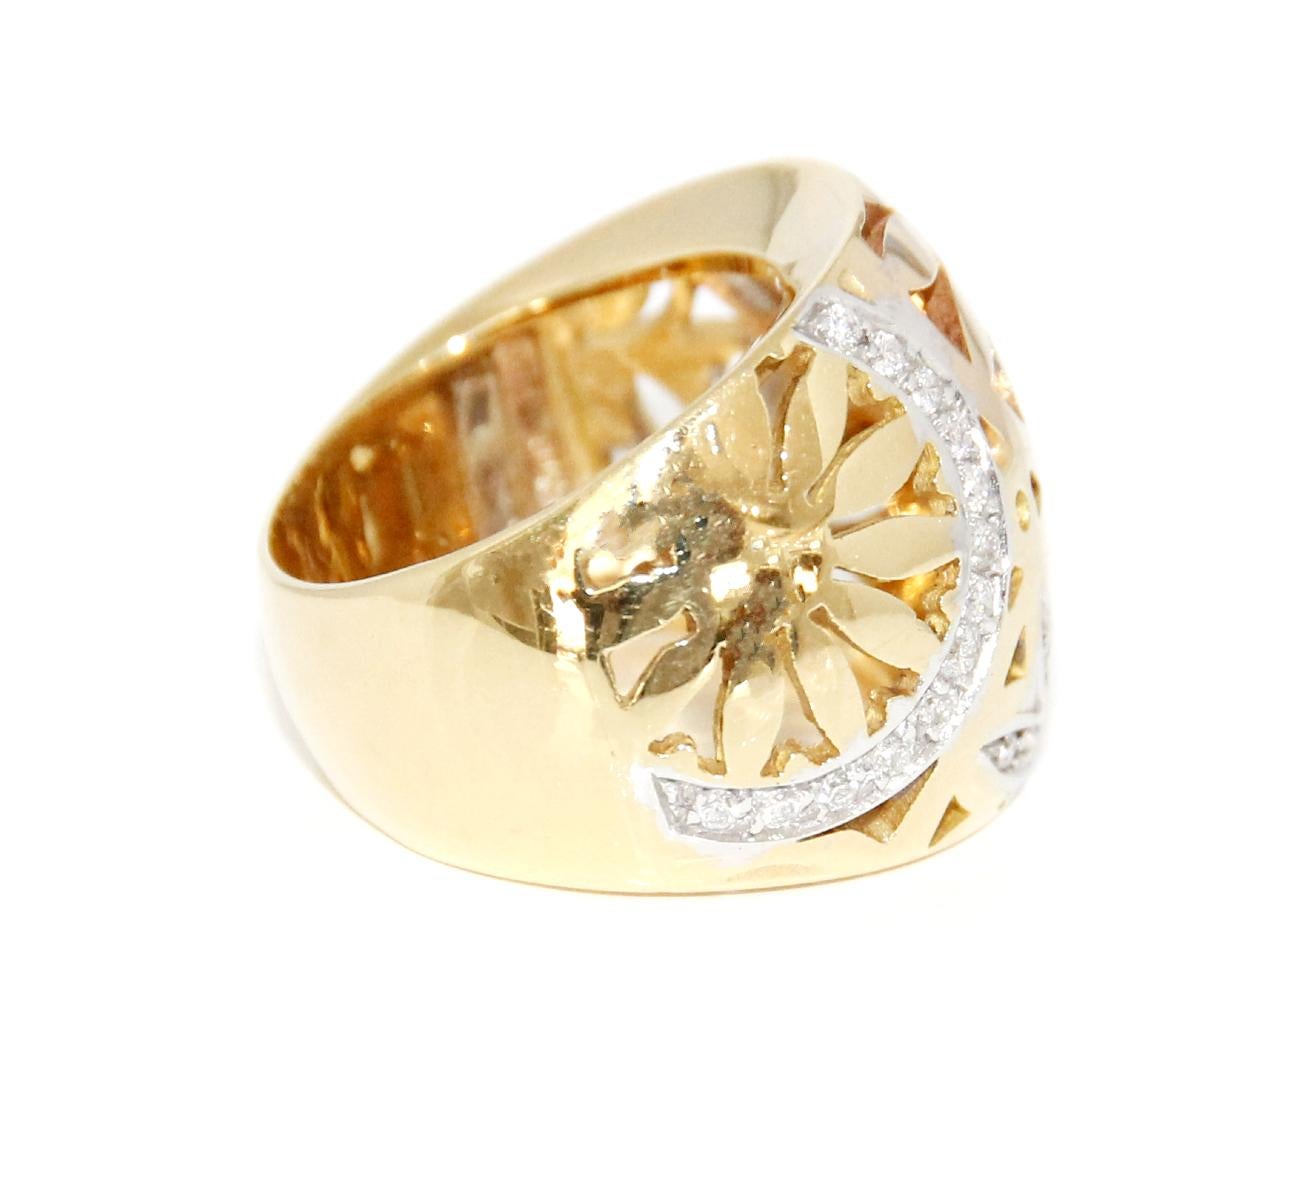 Nouvelle Bague 18K Yellow Gold Diamond  Ring
Diamonds 0.35ctw
Size 8
Retail $6,750.00
